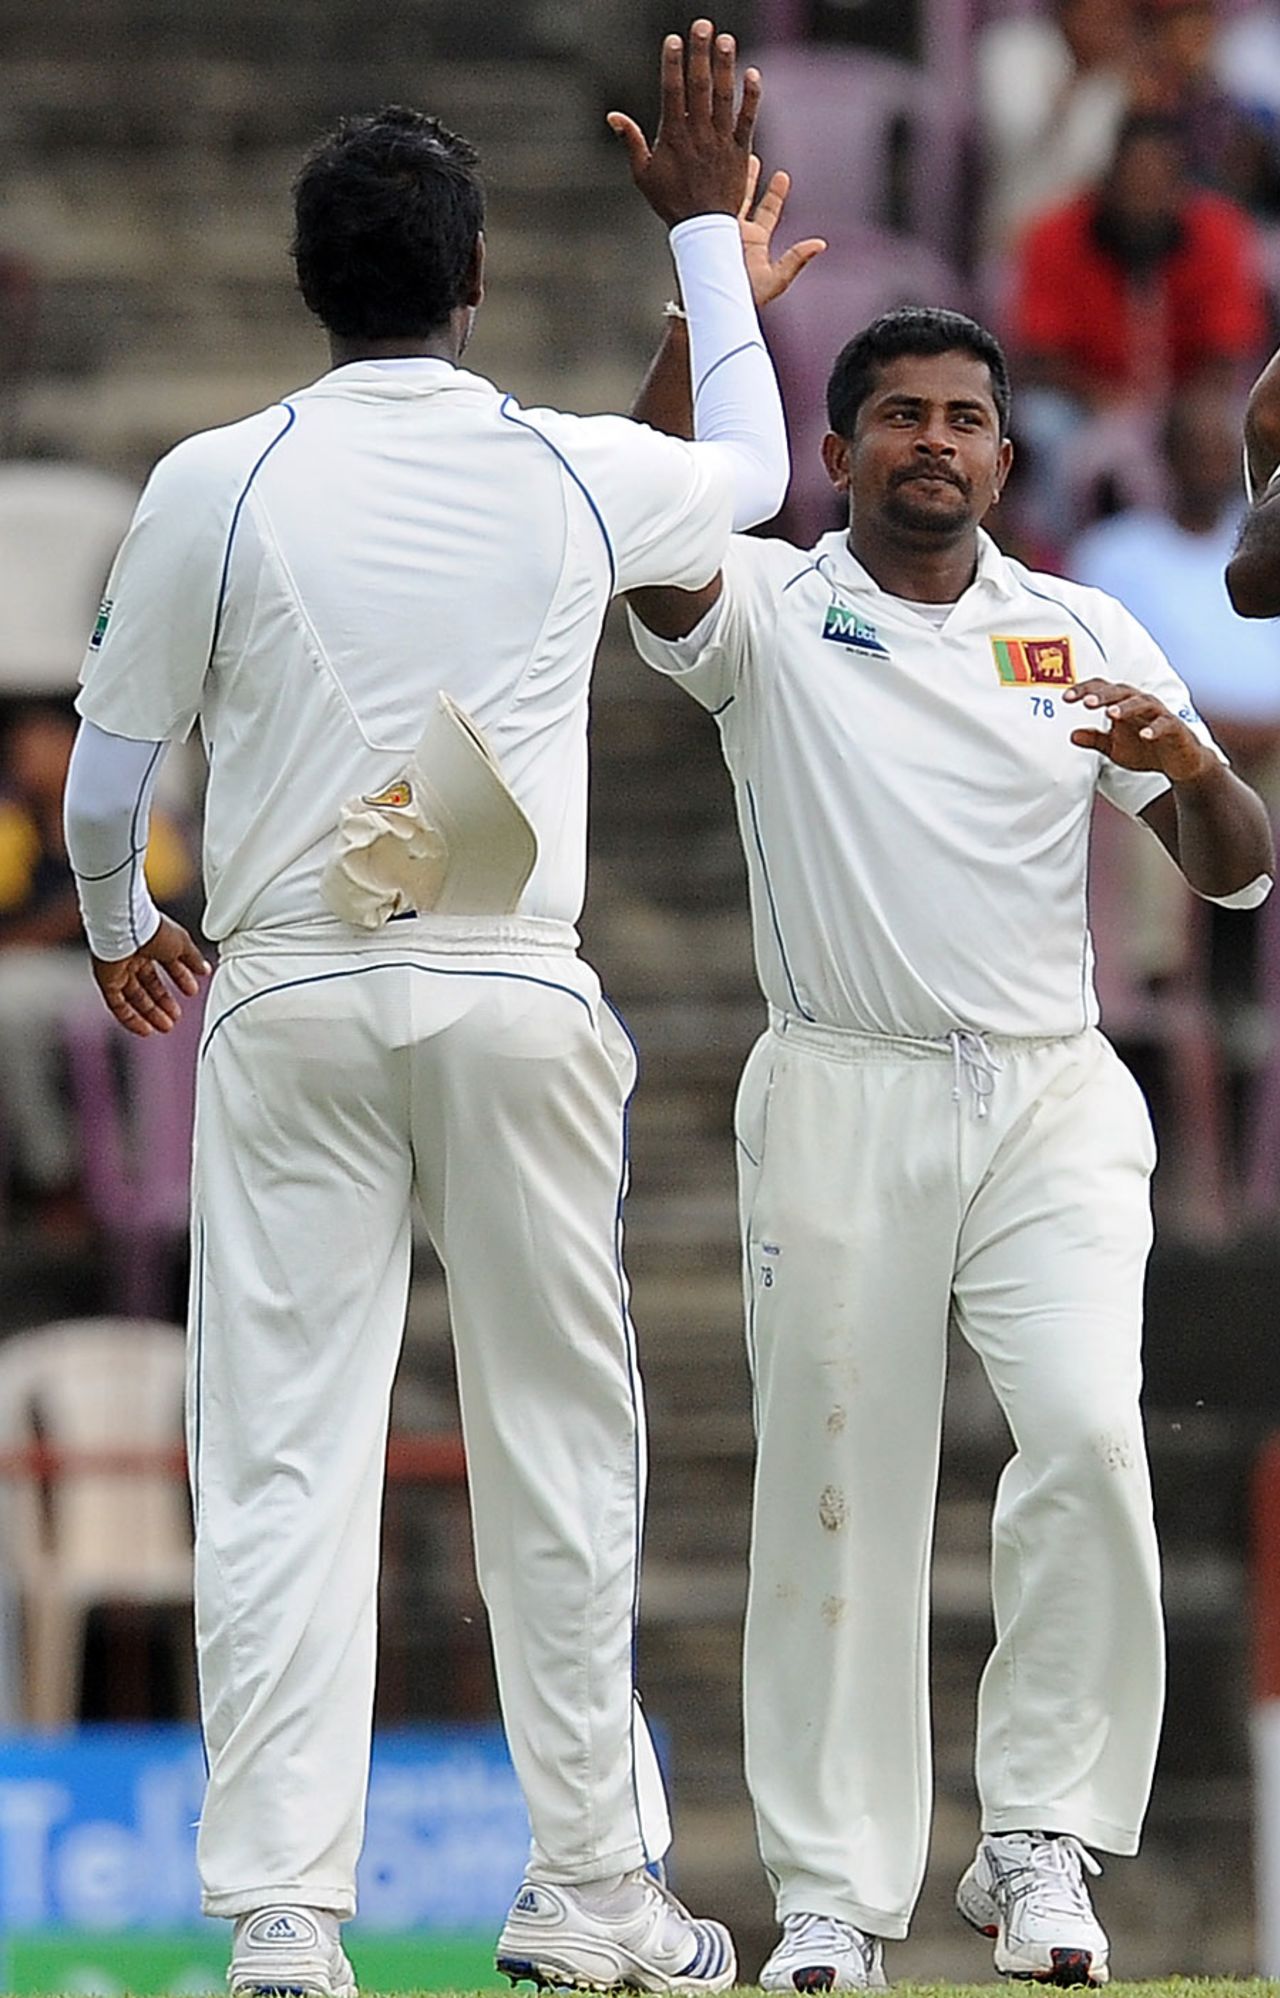 Rangana Herath celebrates after dismissing Dwayne Bravo, Sri Lanka v West Indies, 3rd Test, Pallekele, 2nd day, December 2, 2010